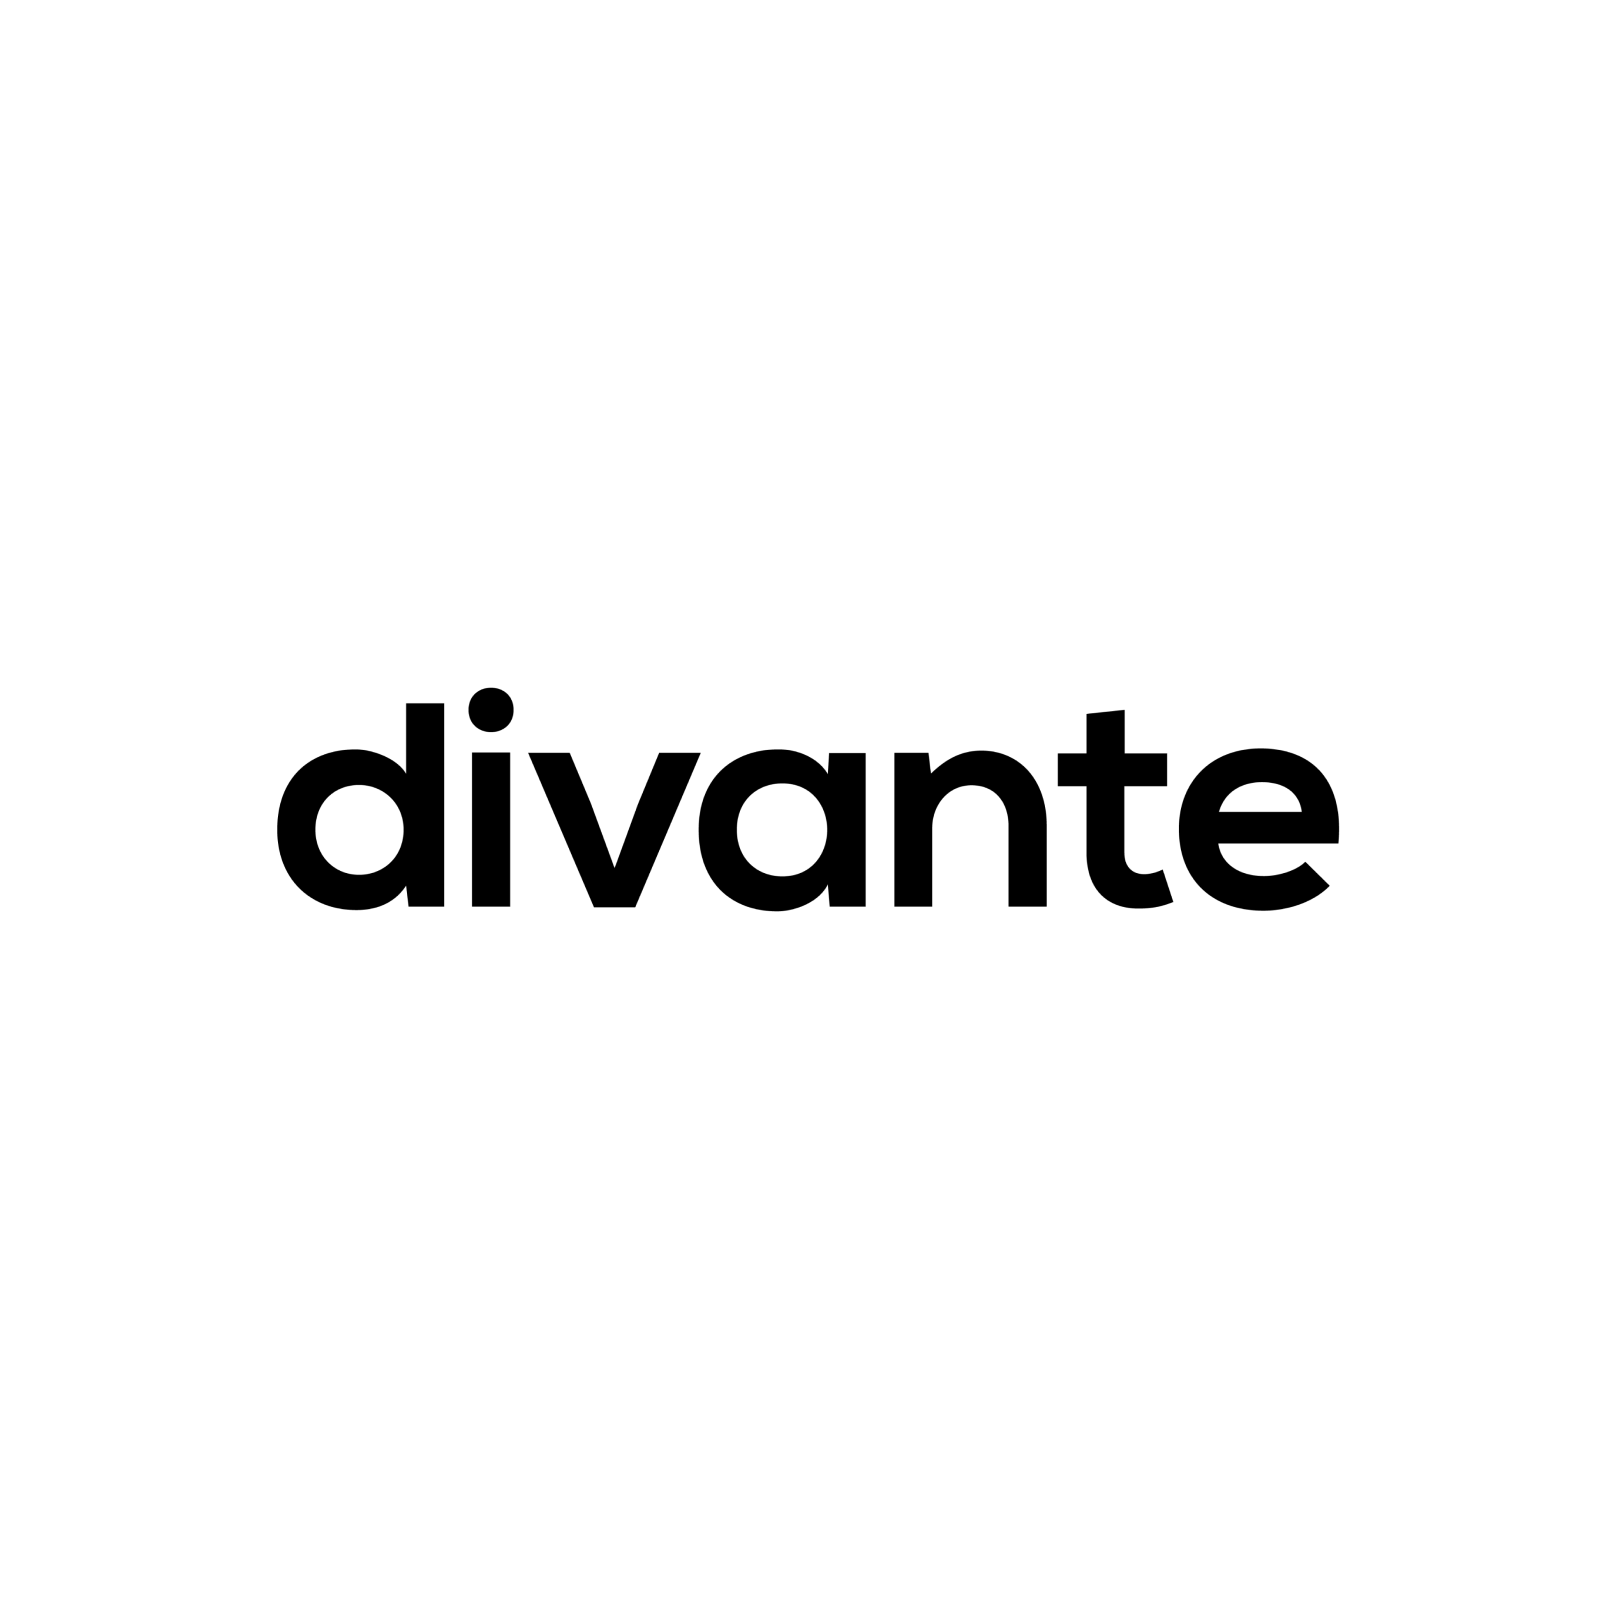 Divante profile on Qualified.One